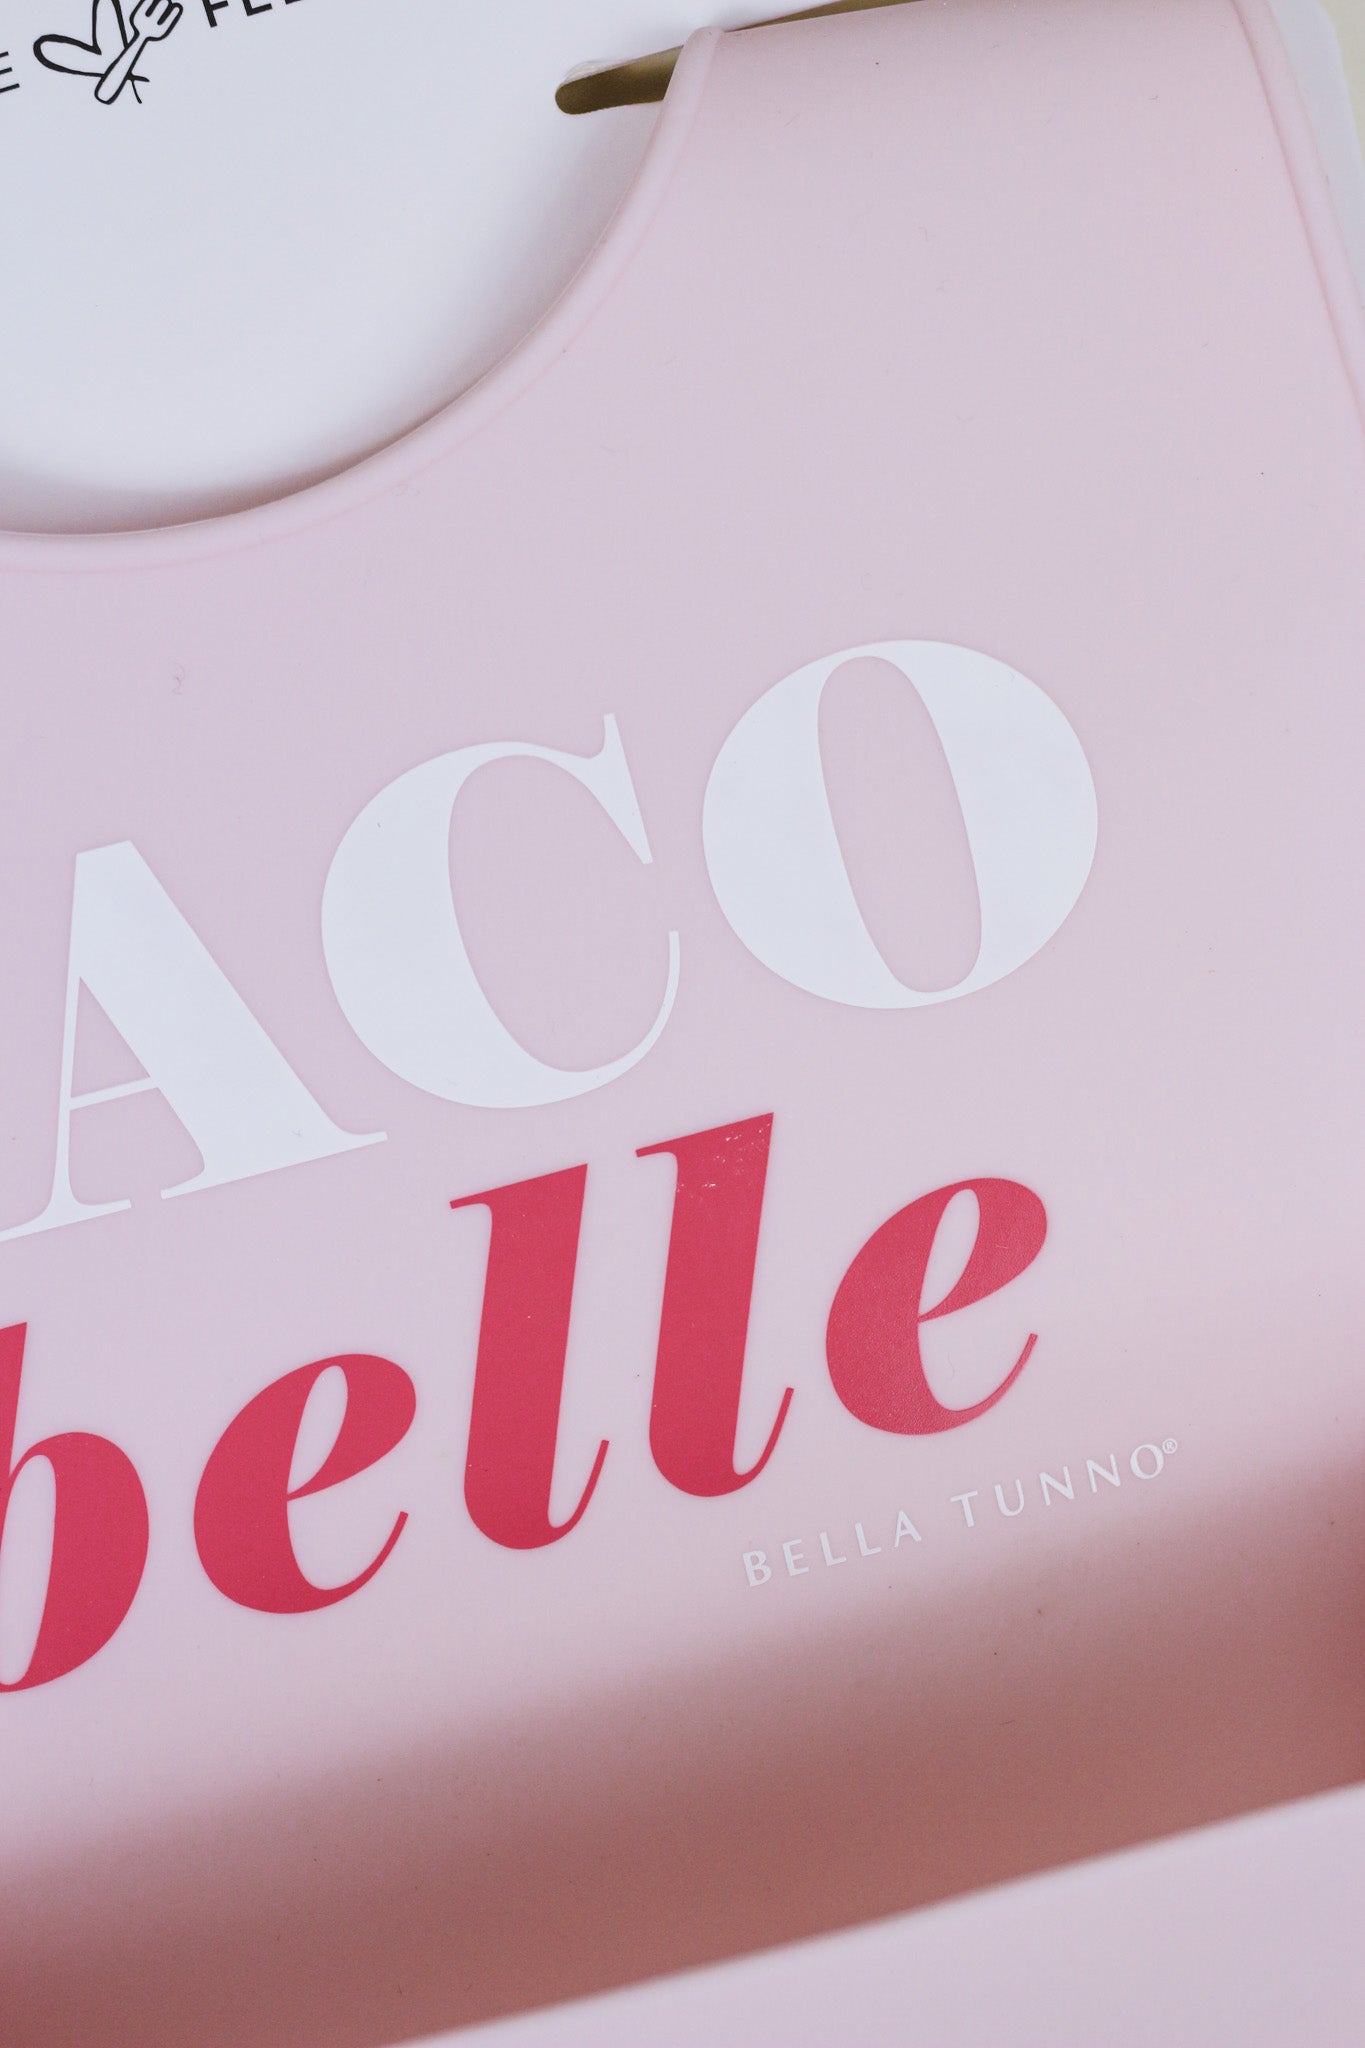 Light Pink Taco Belle Silicone Bib